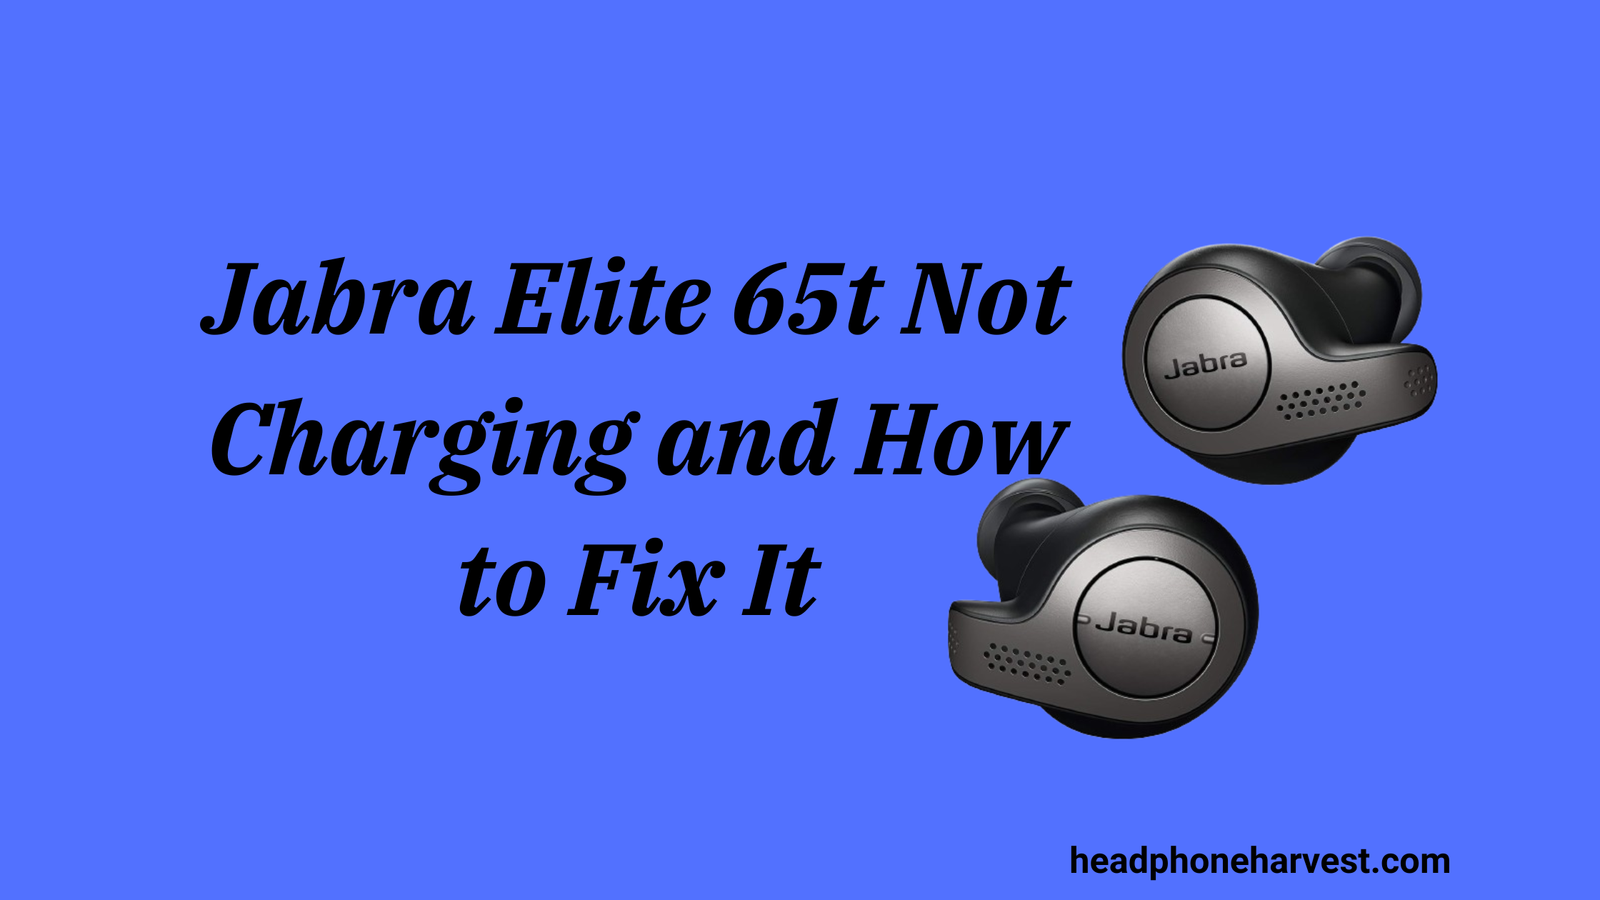 Jabra Elite 65t Not Charging